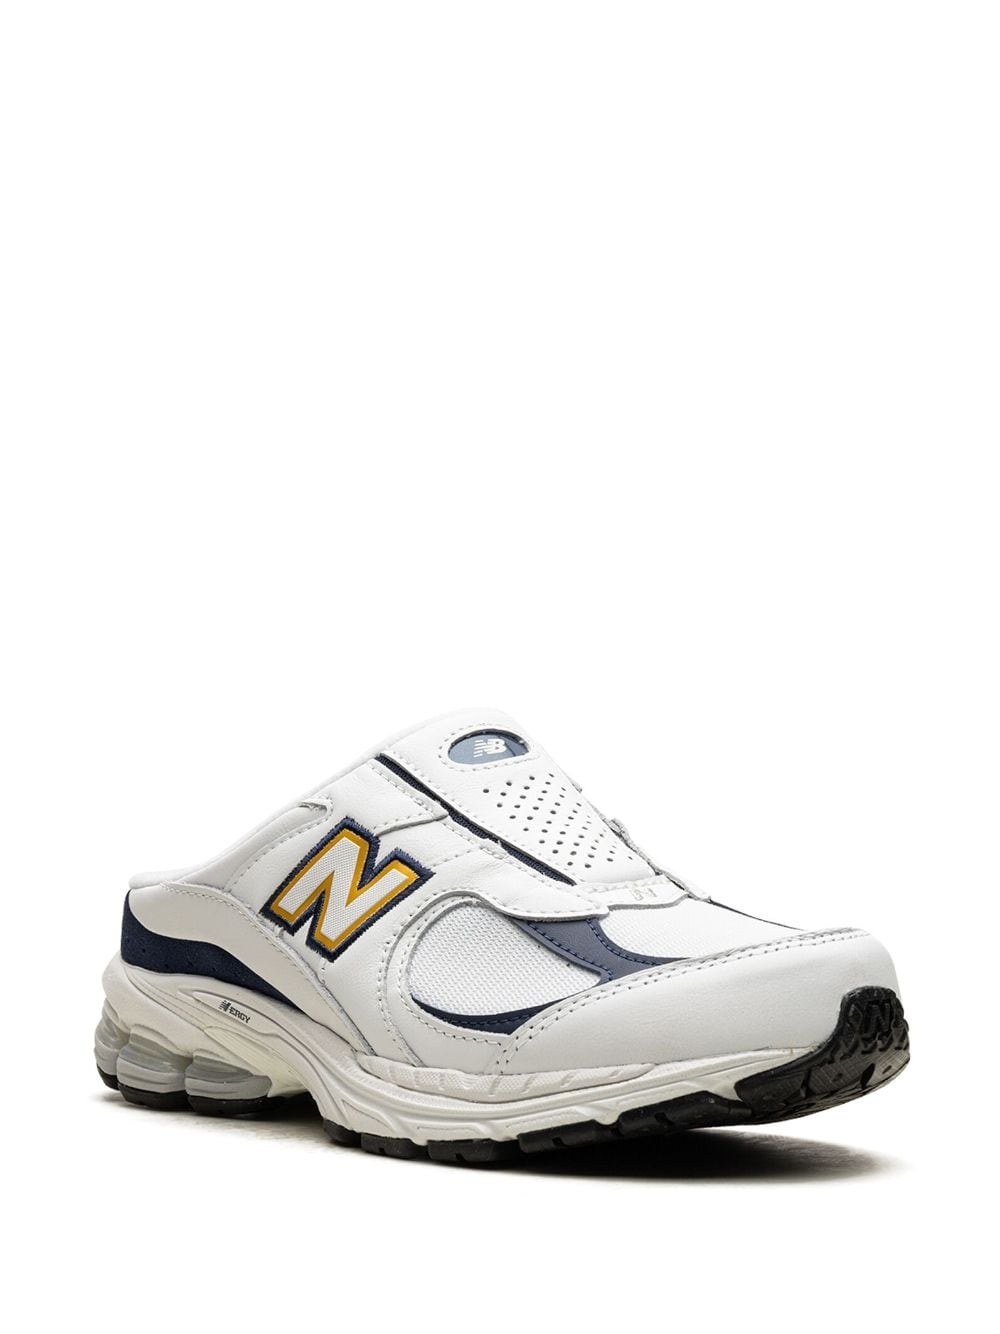 2002R "White / Blue" sneaker mules - 2